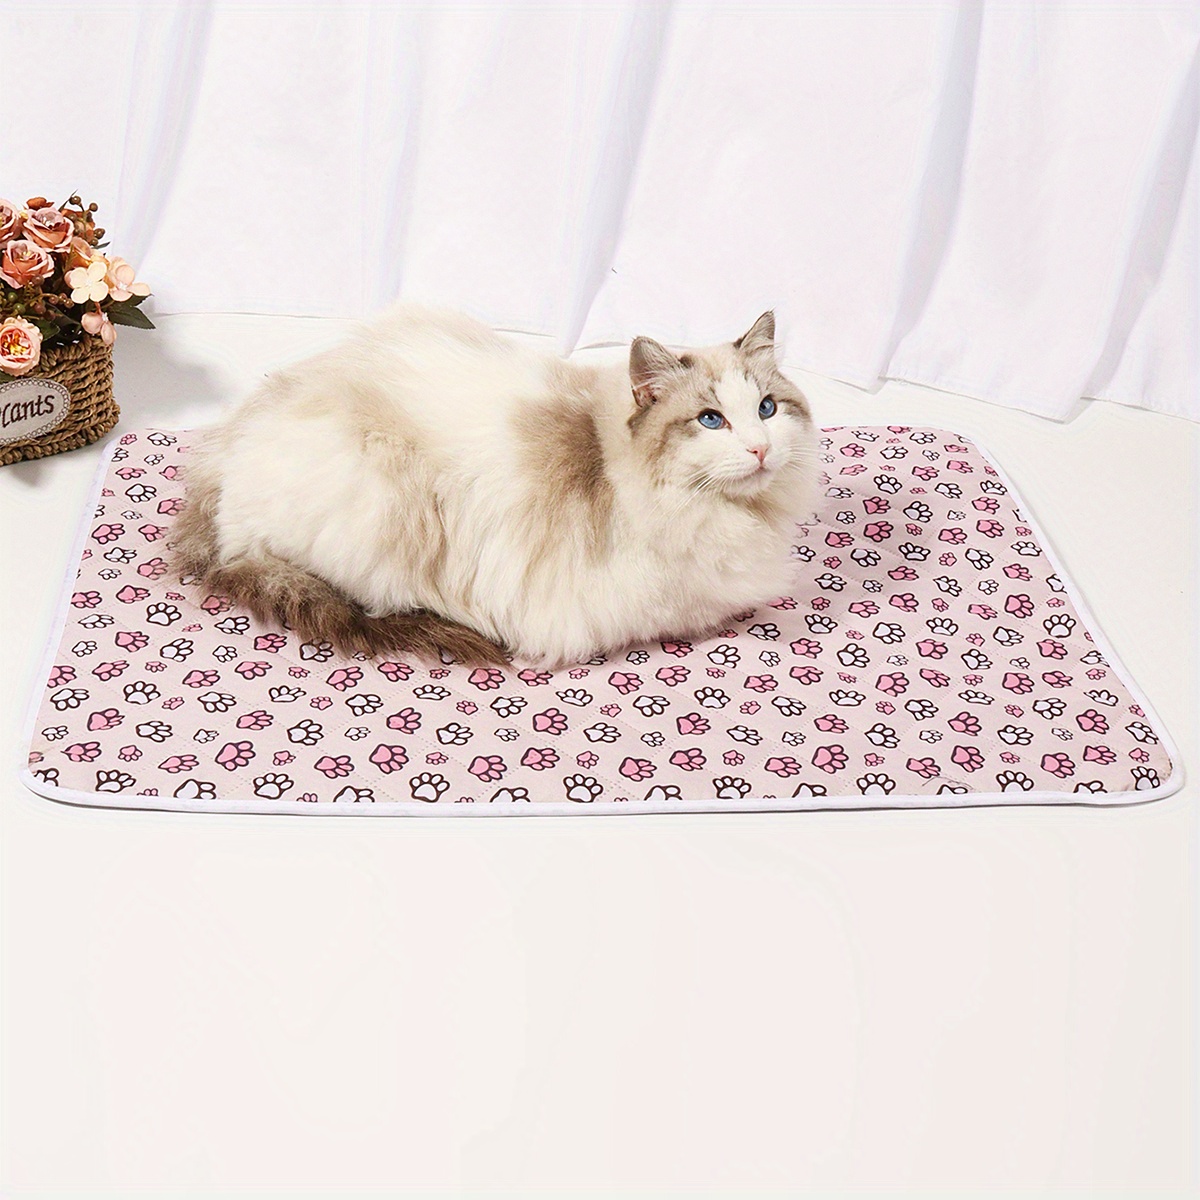 pet comfortable cooling mat with cute patterns cat and dog sleeping mat pet beds sofa cushion details 0